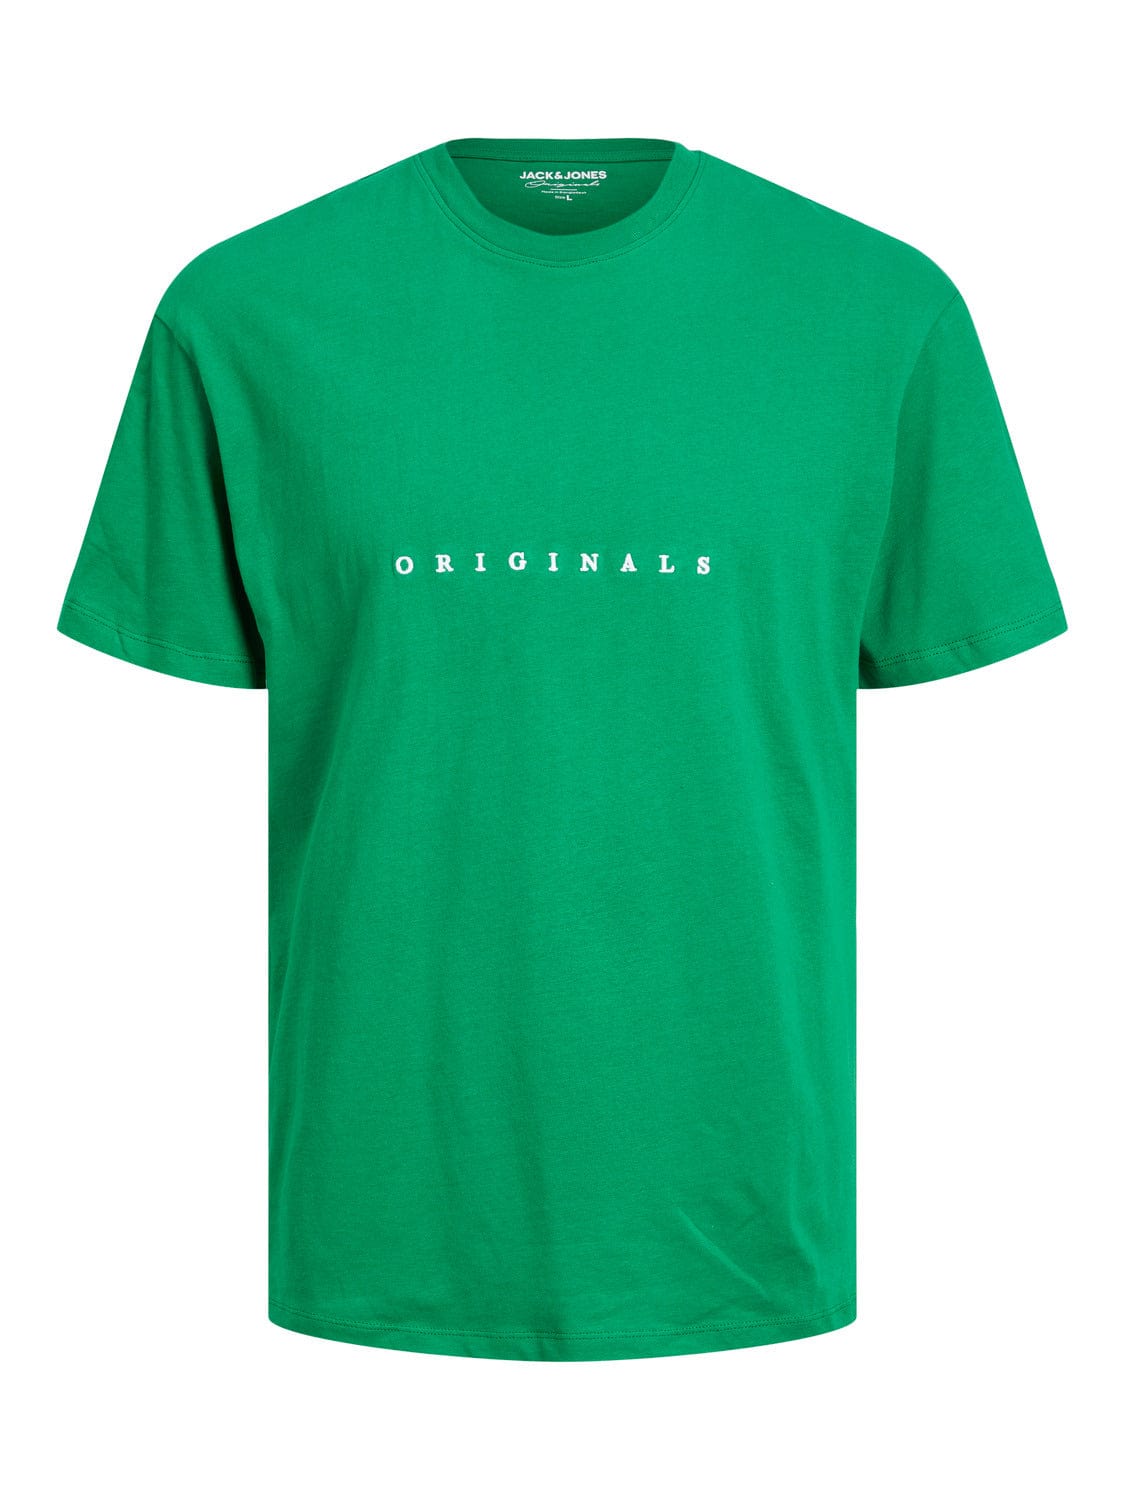 Camiseta Copenhague - Verde